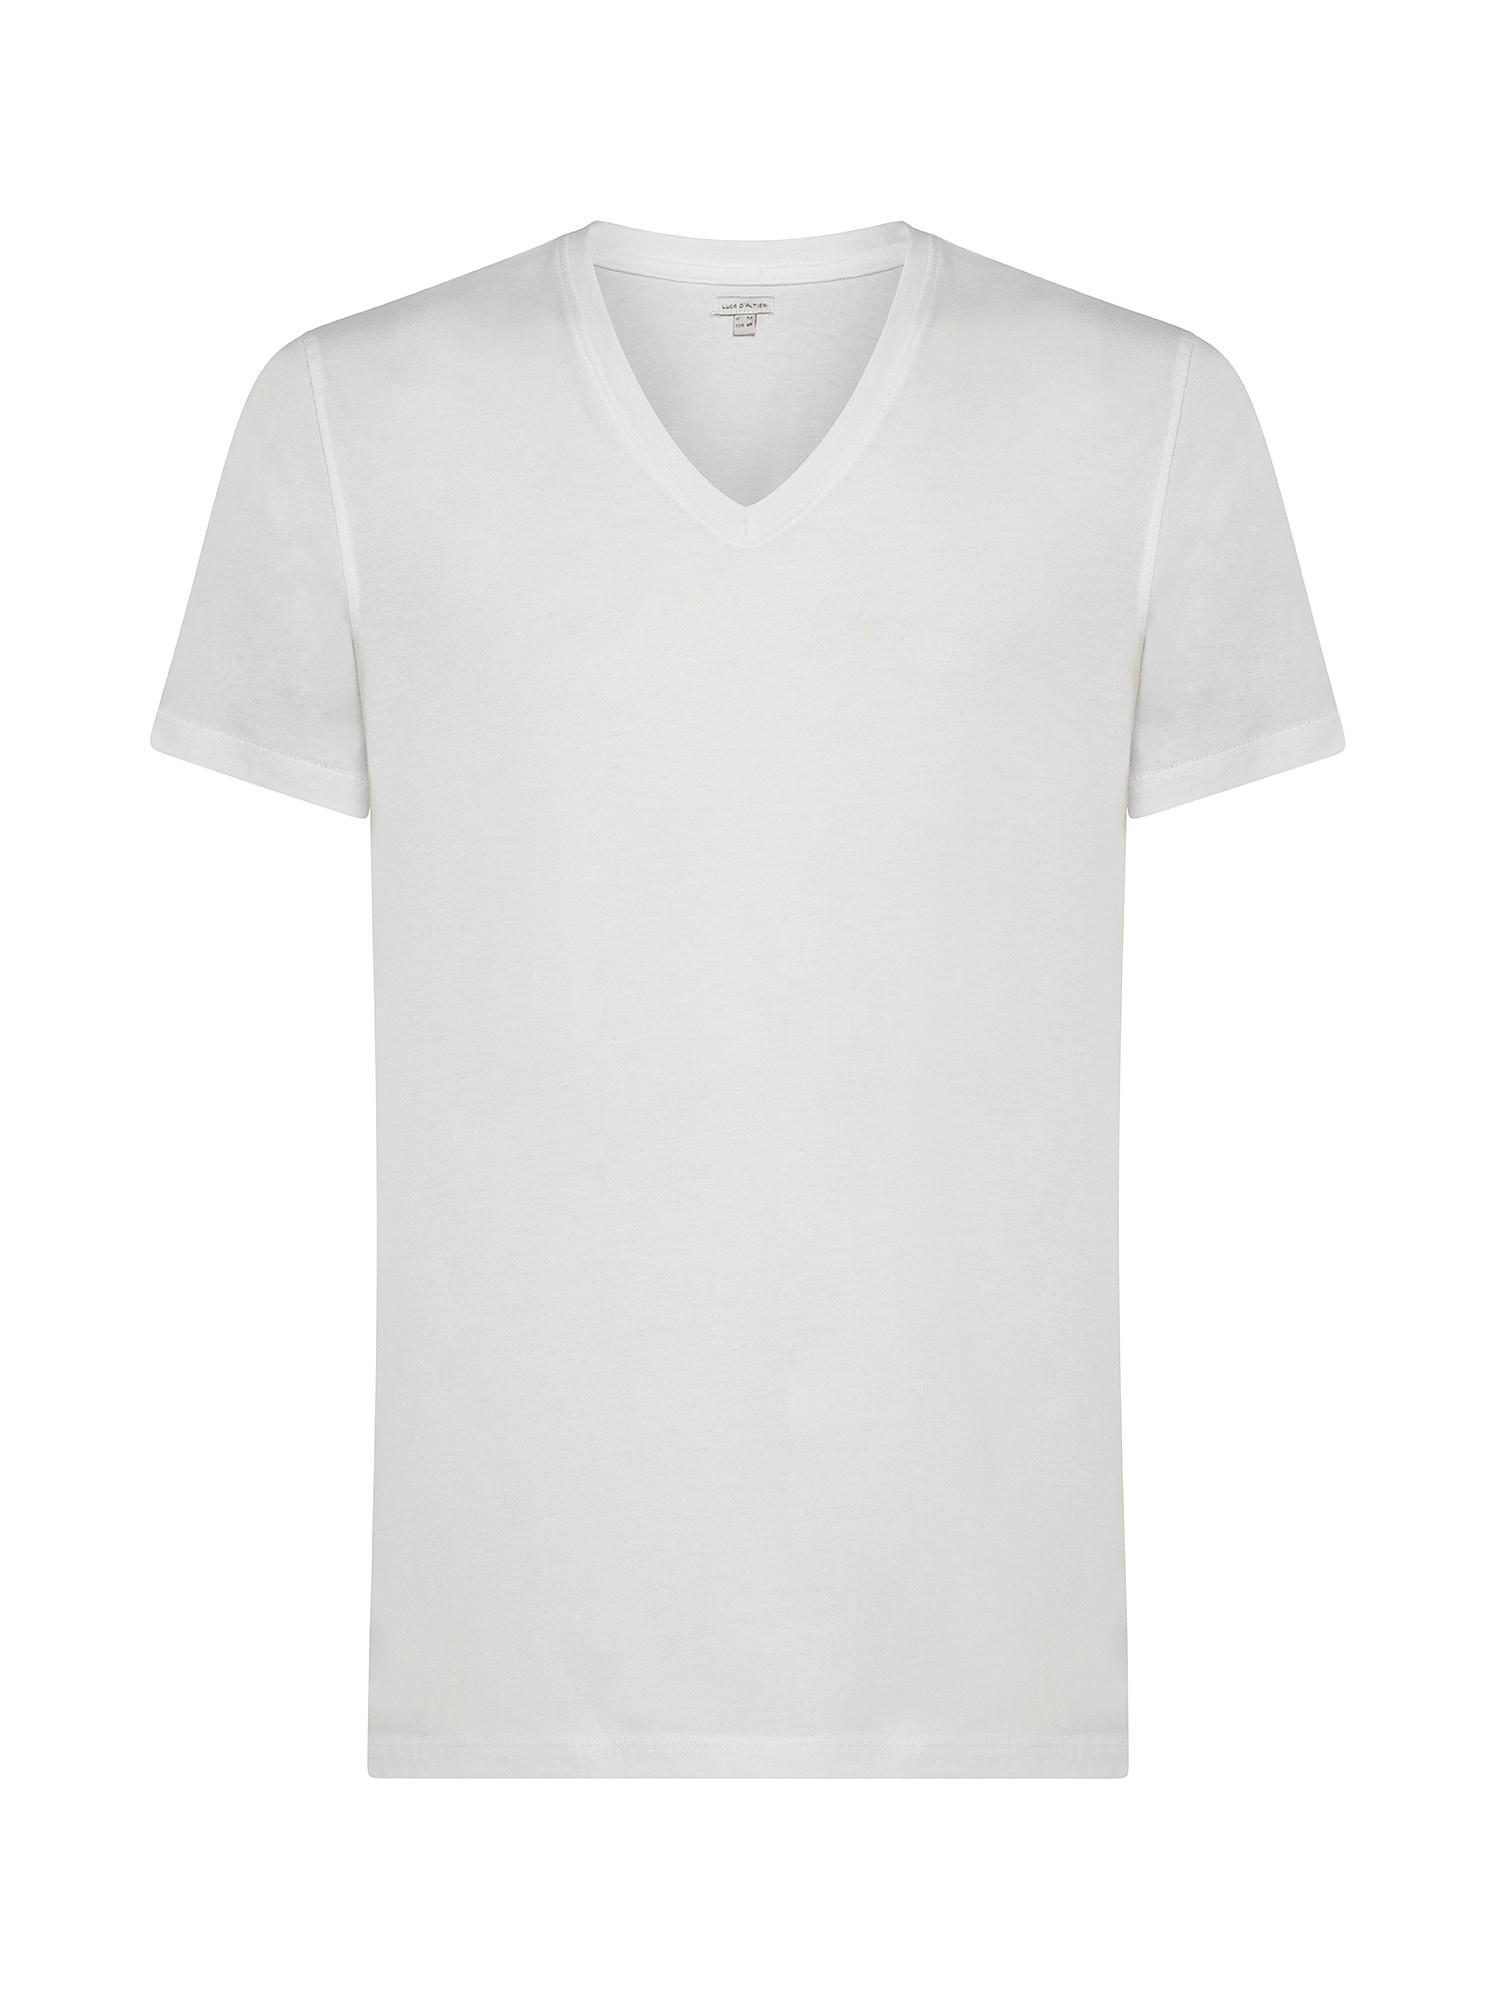 Luca D'Altieri - T-shirt scollo a V cotone supima, Bianco, large image number 0